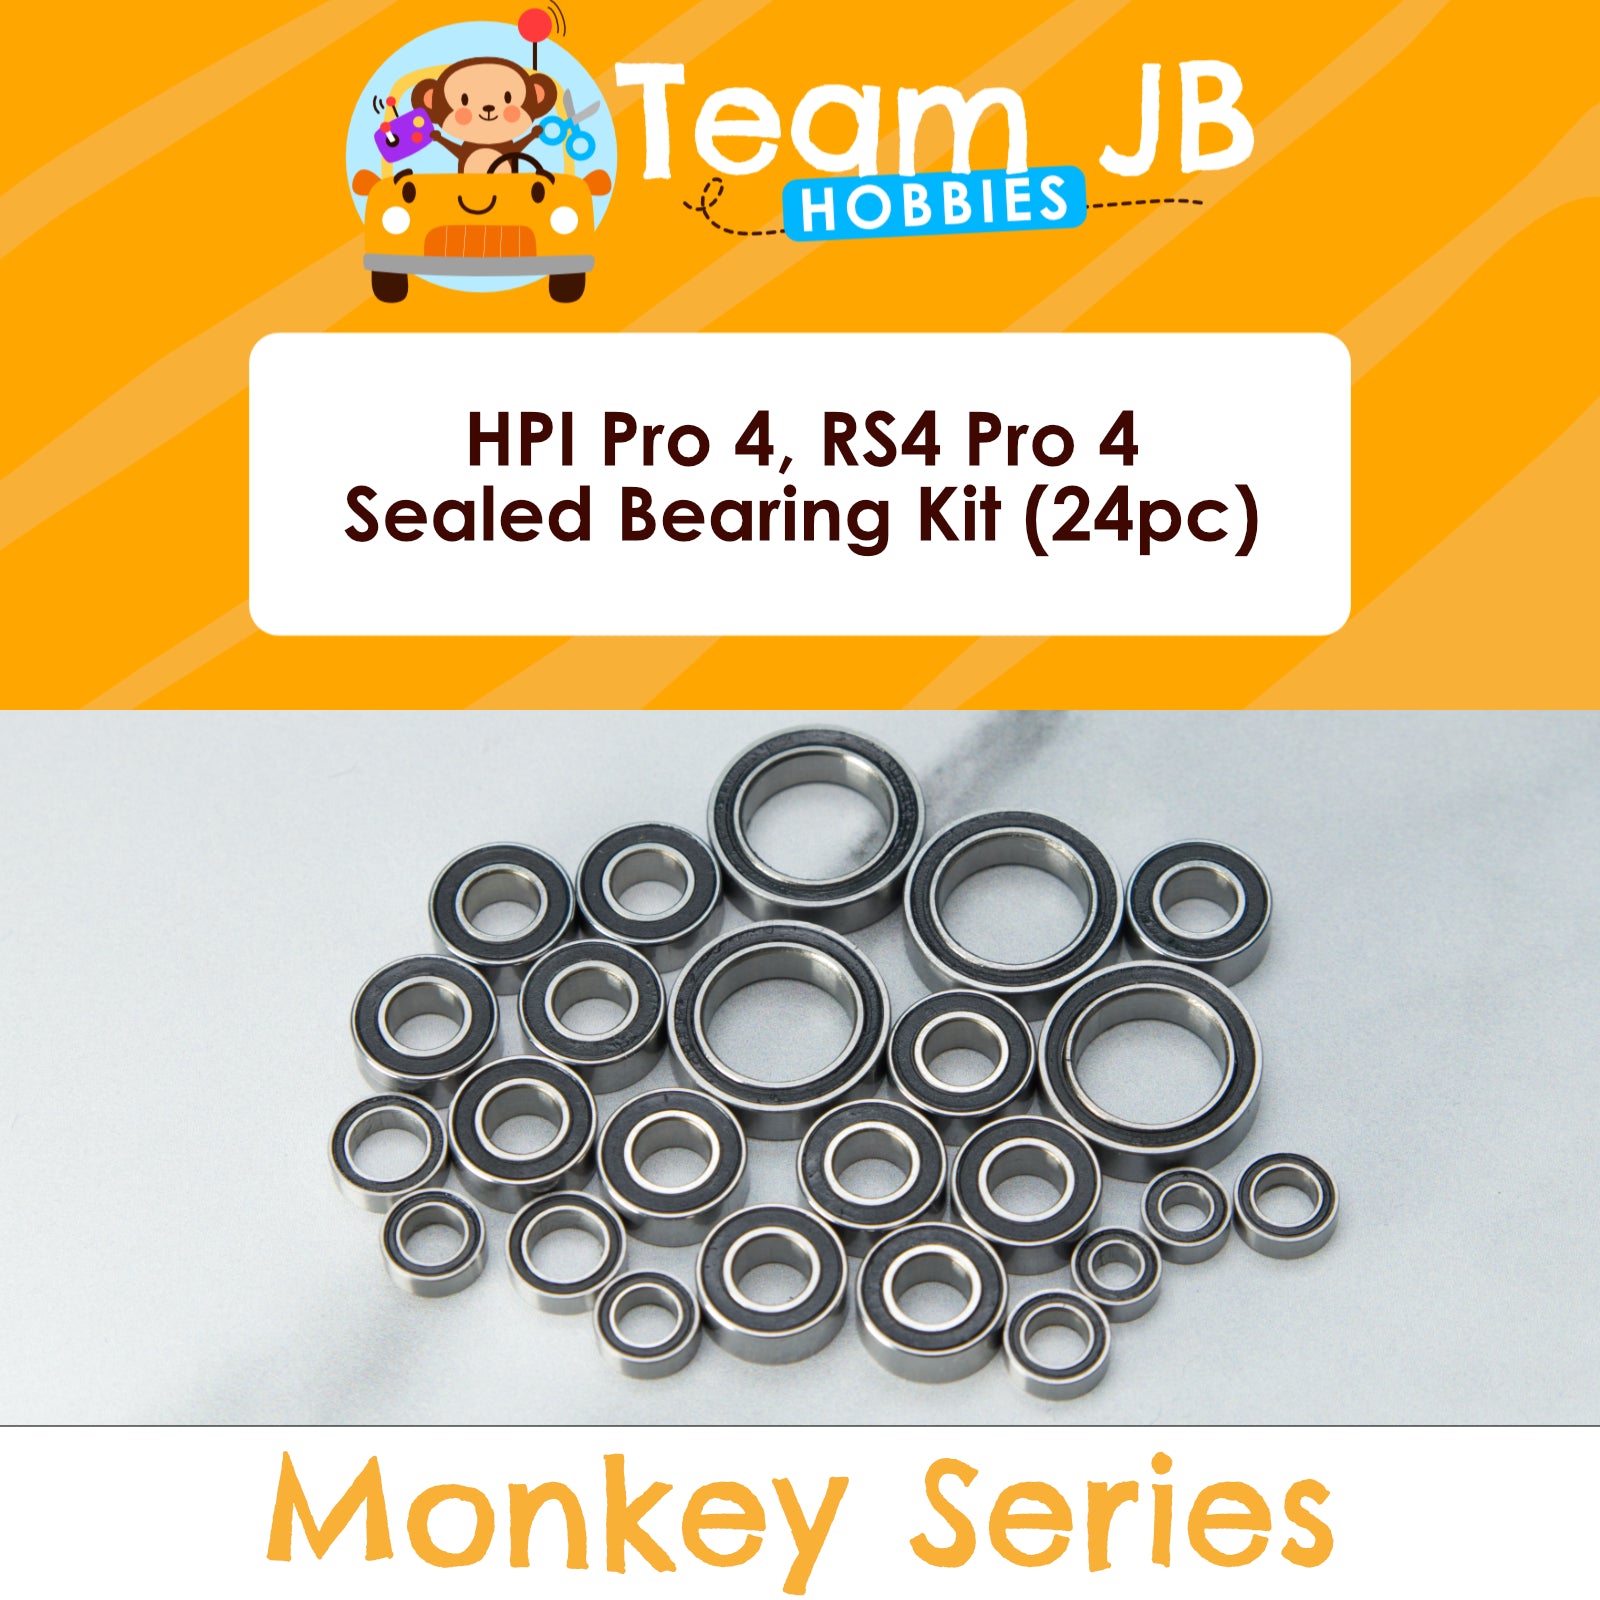 HPI Pro 4, RS4 Pro 4 - Sealed Bearing Kit